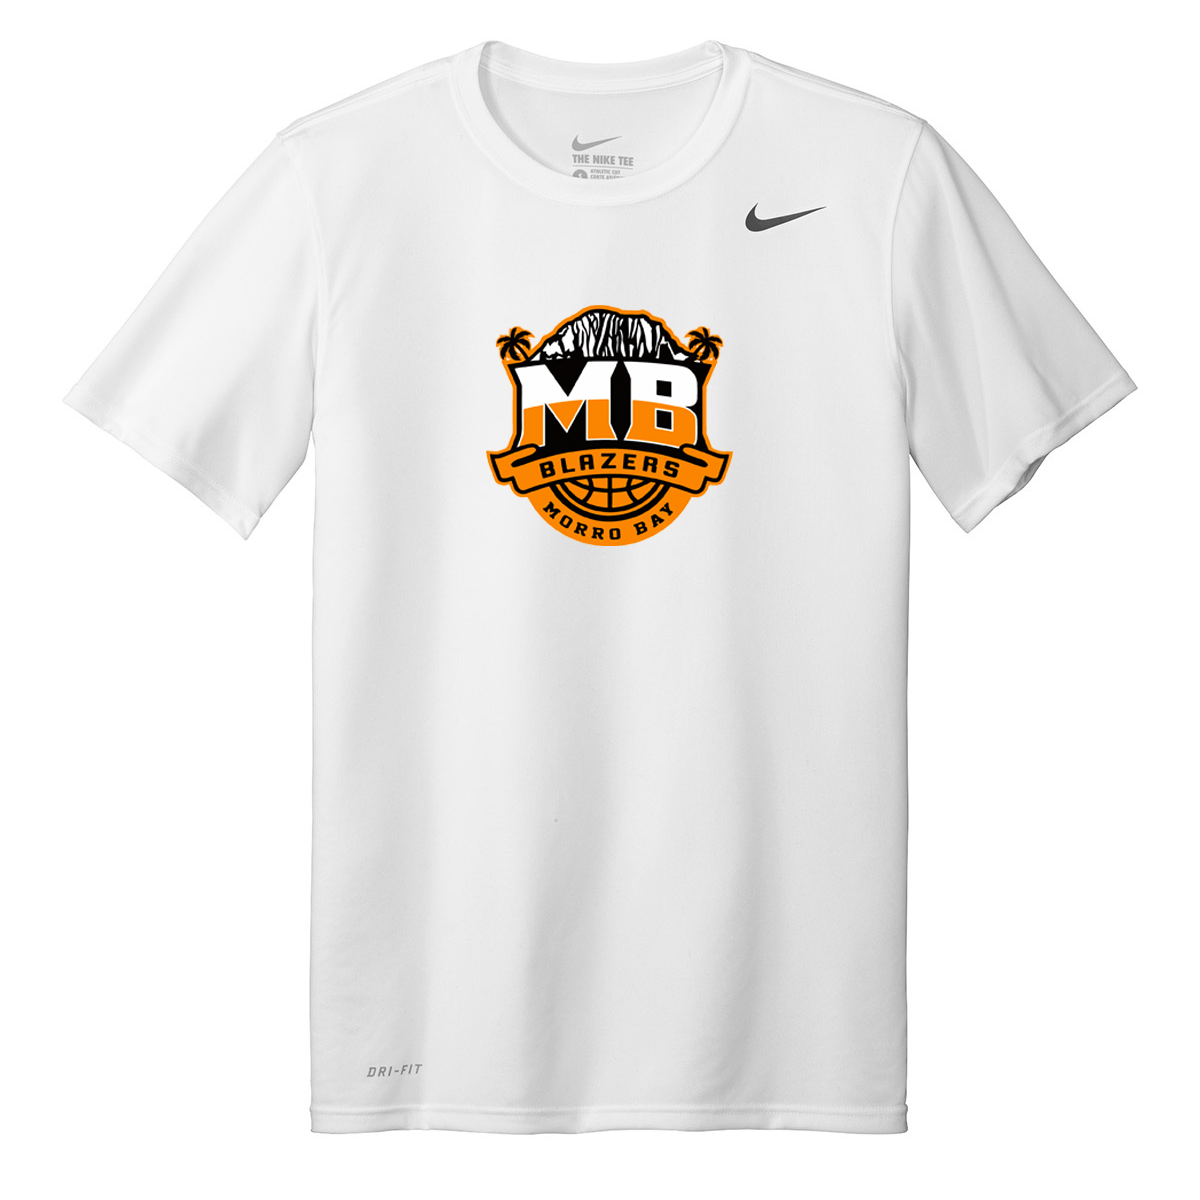 MB Blazers Nike Legend Tee